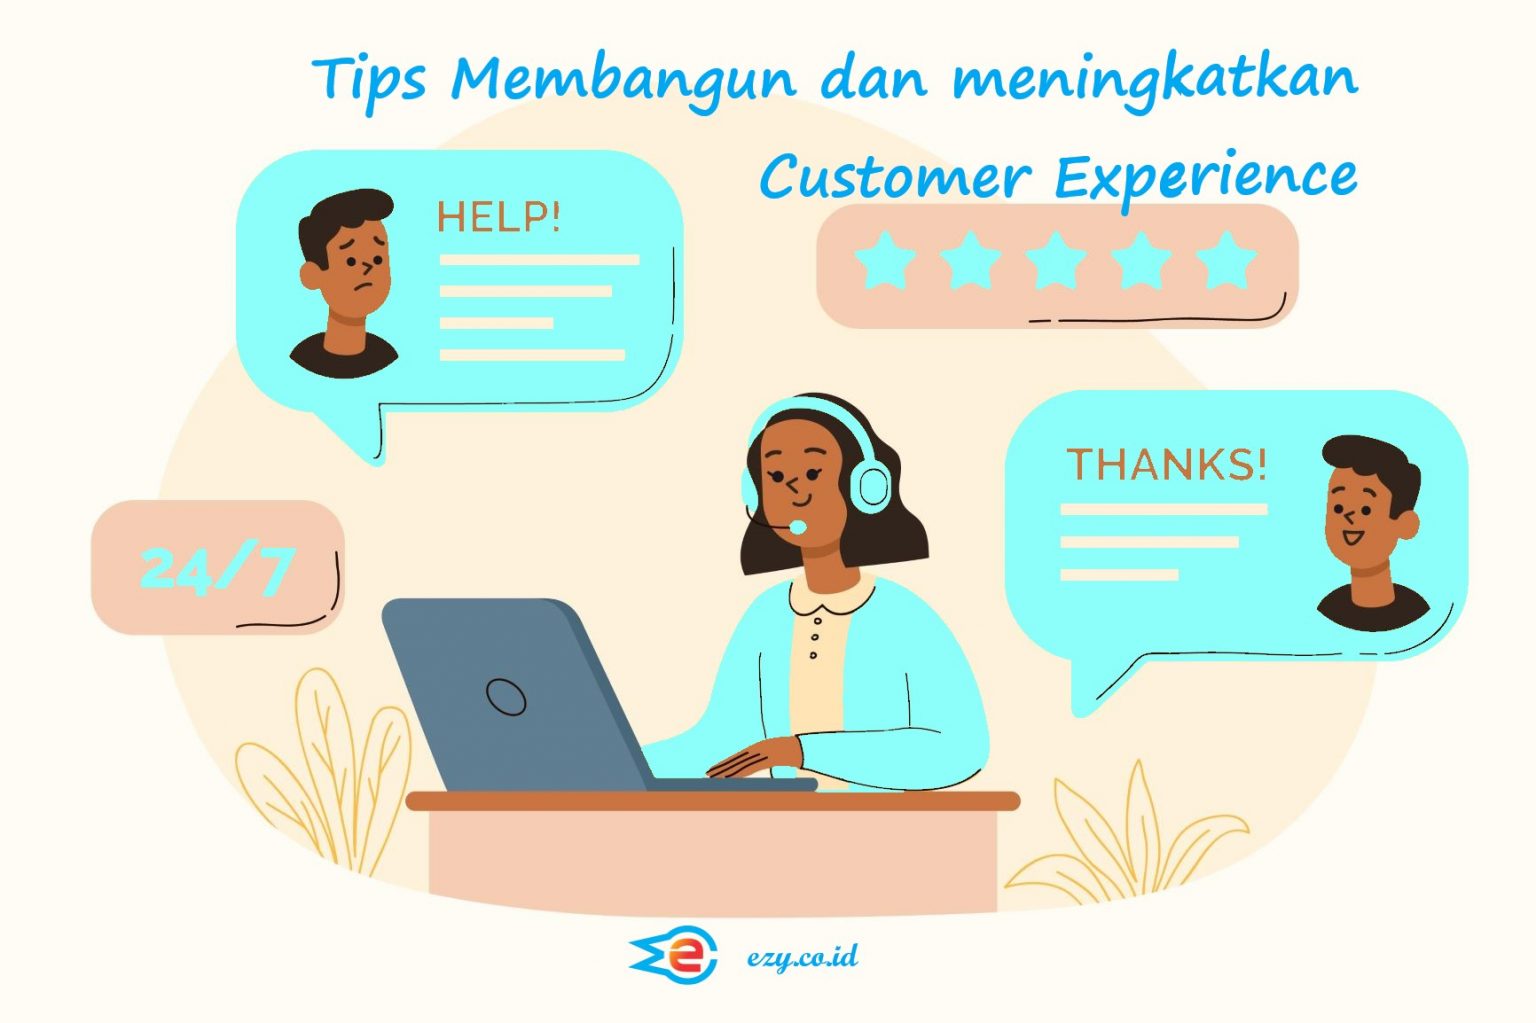 Tips Membangun dan meningkatkan Customer Experience